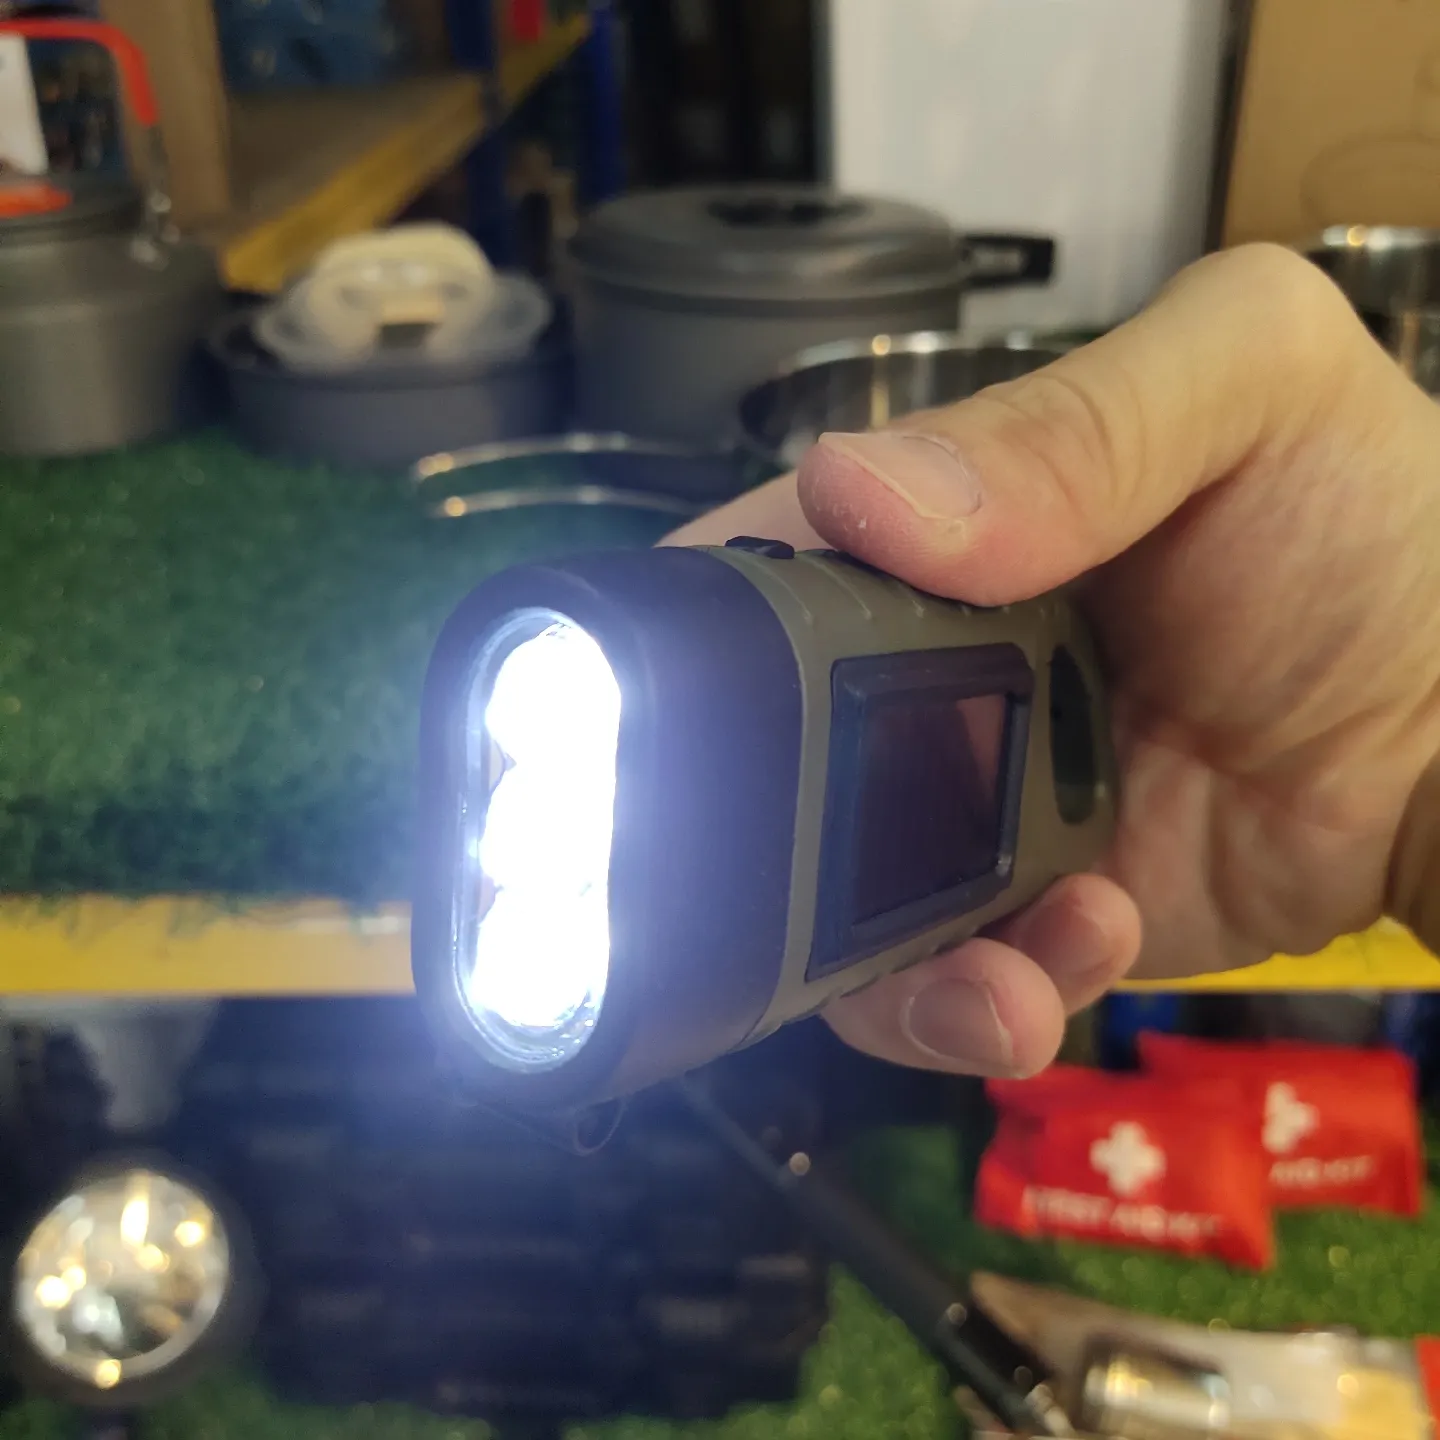 Homemade hand crank flashlight 